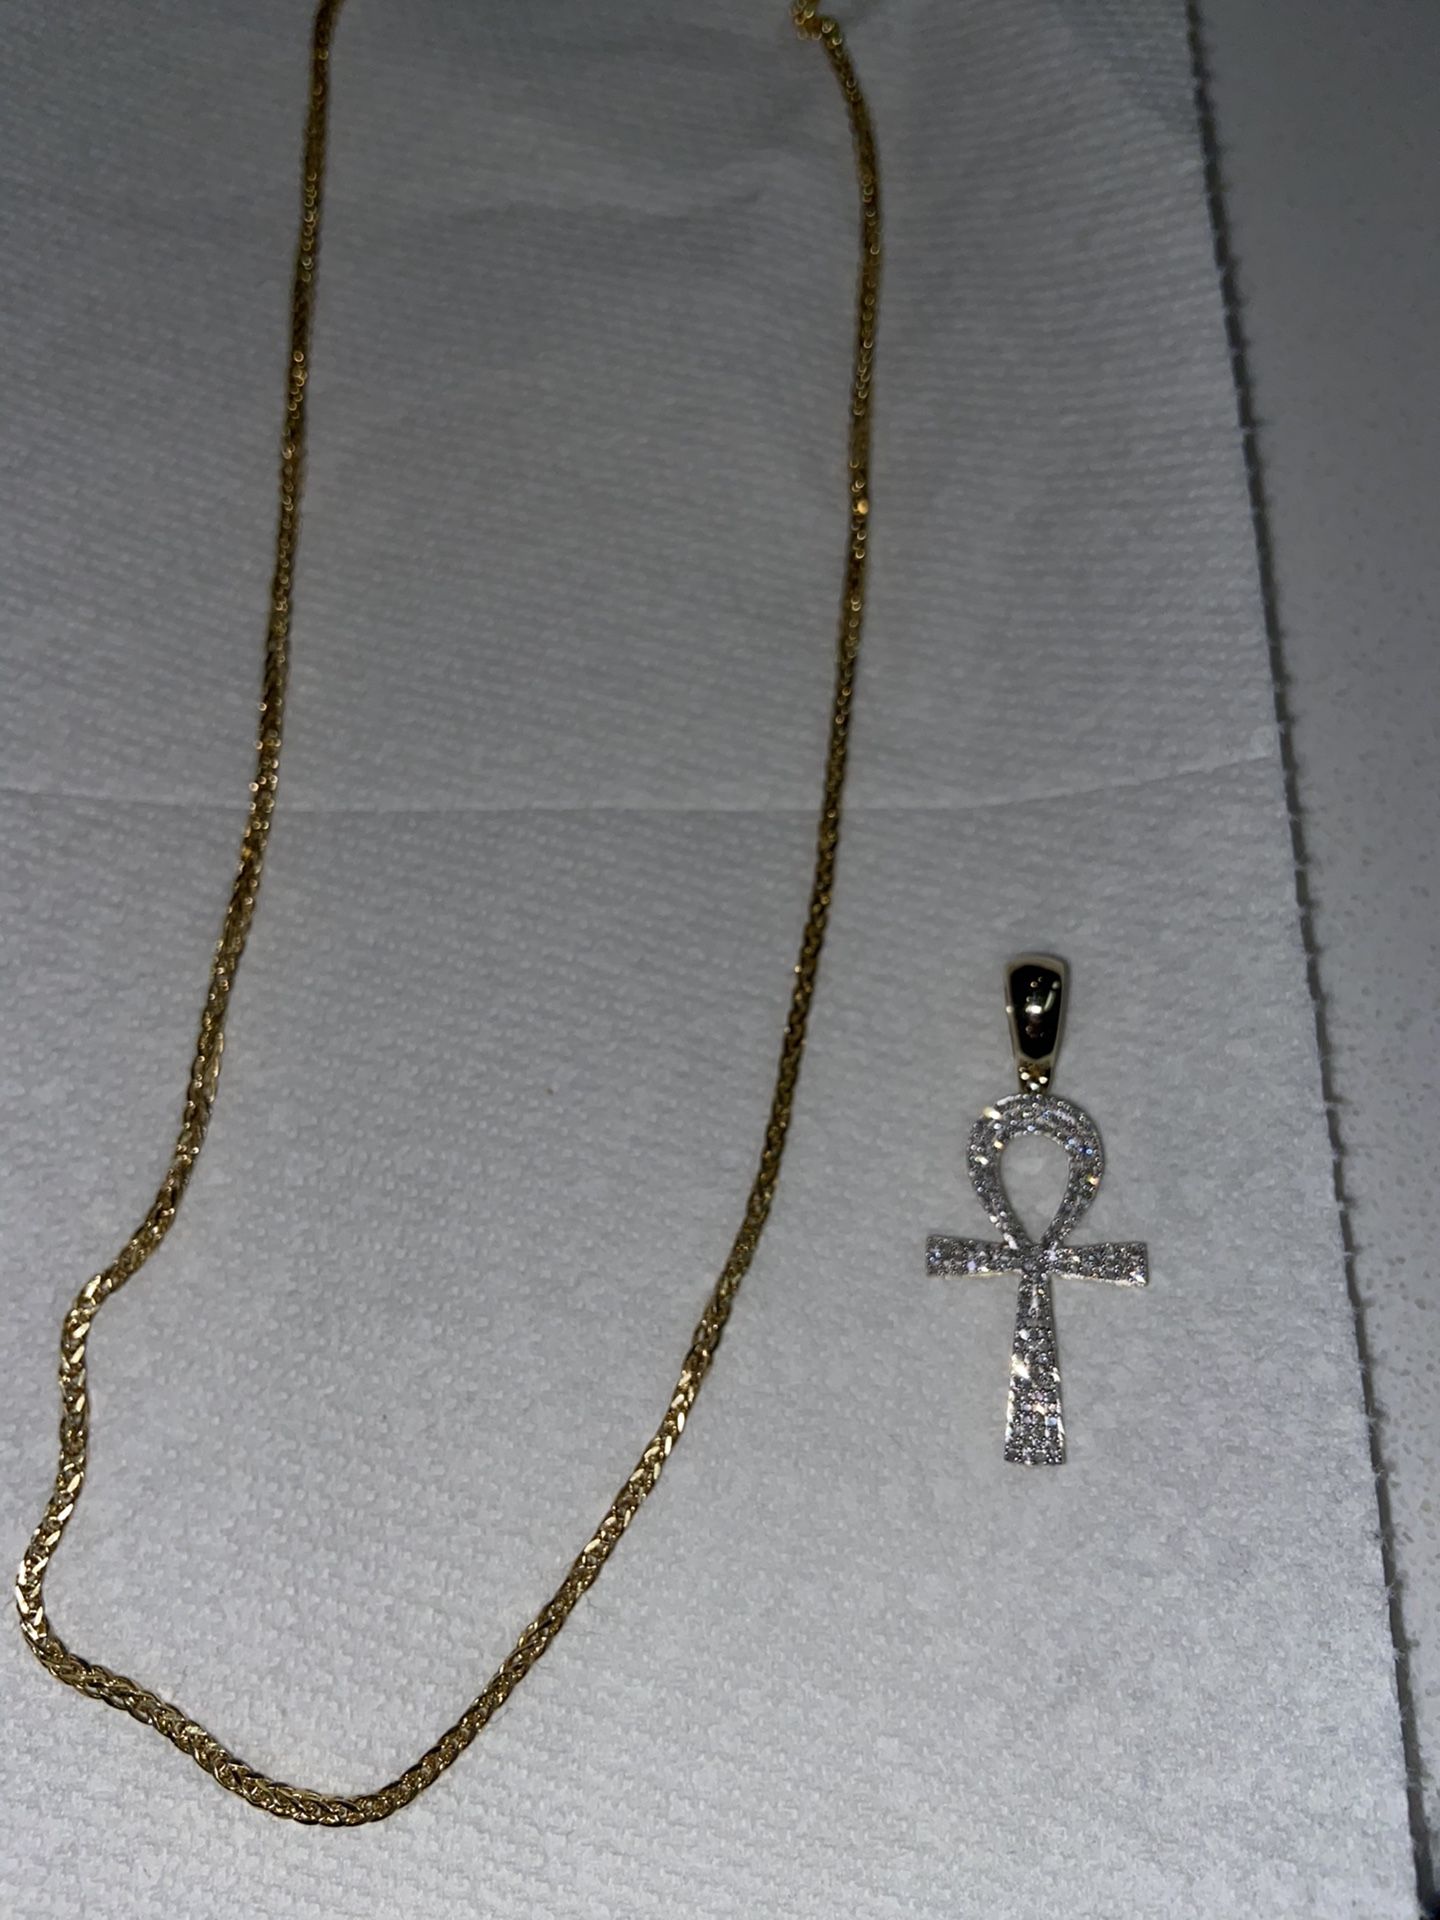 10k chain with 10k Vs diamond pendant